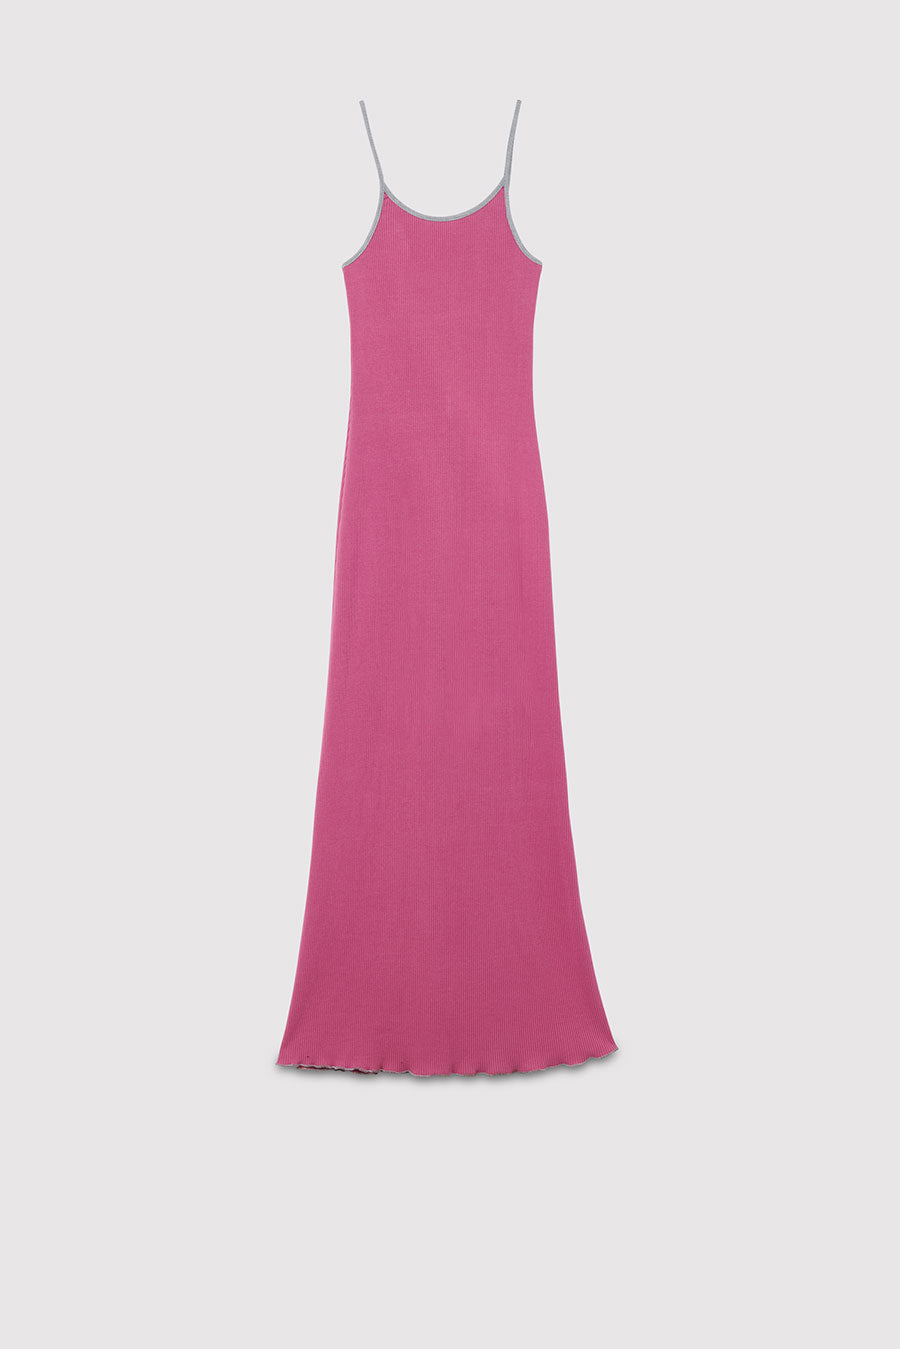 Chimera Sleepwear Victoria Slip Dress